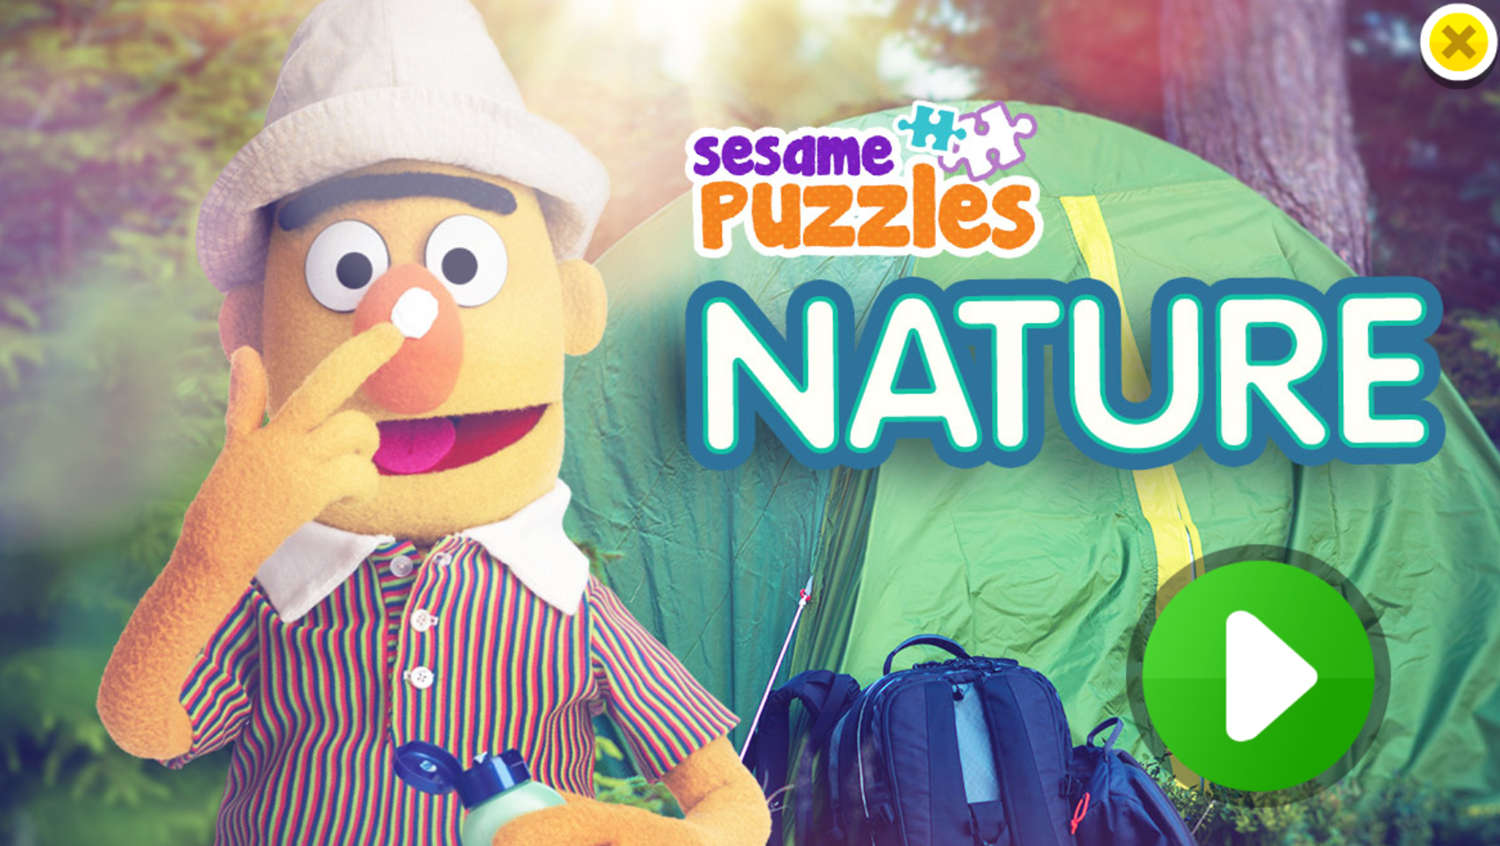 Sesame Street Sesame Puzzles Nature Game Welcome Screen Screenshot.